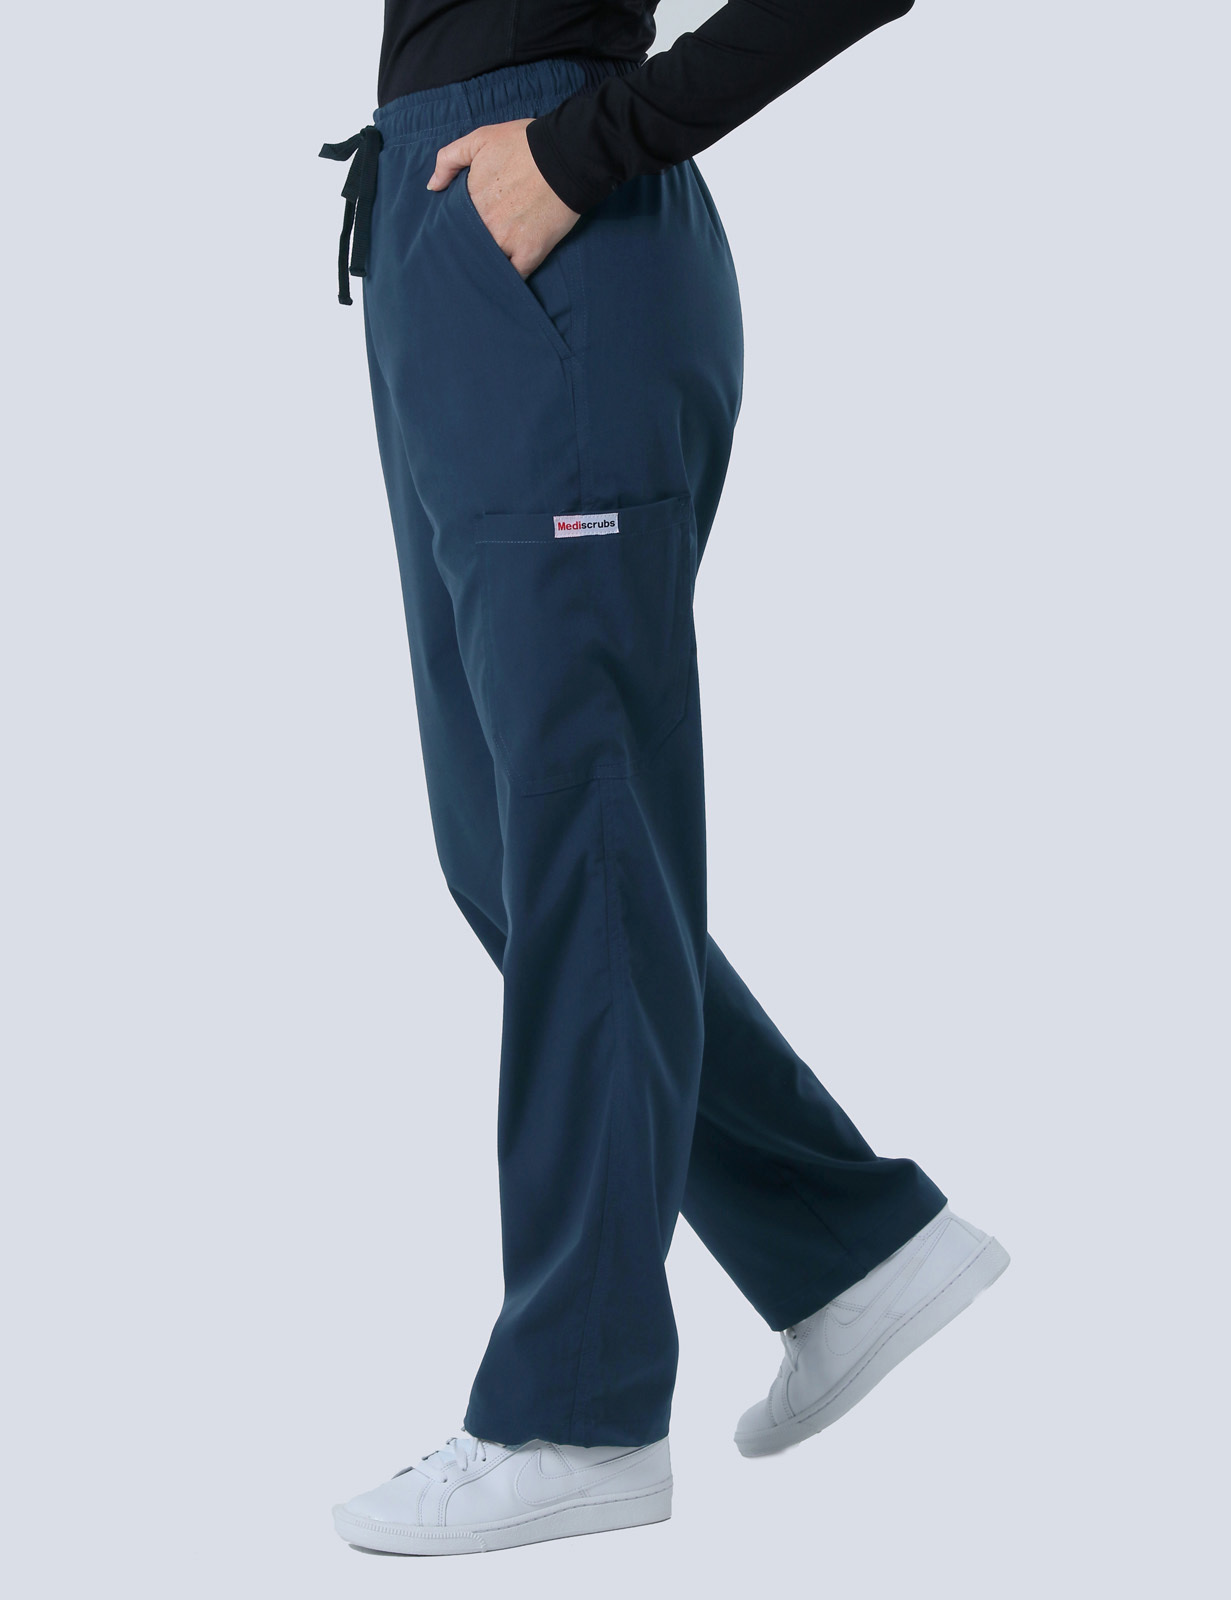 Logan Hospital - ICU CN (4 Pocket Scrub Top and Cargo Pants in Navy incl Logos)